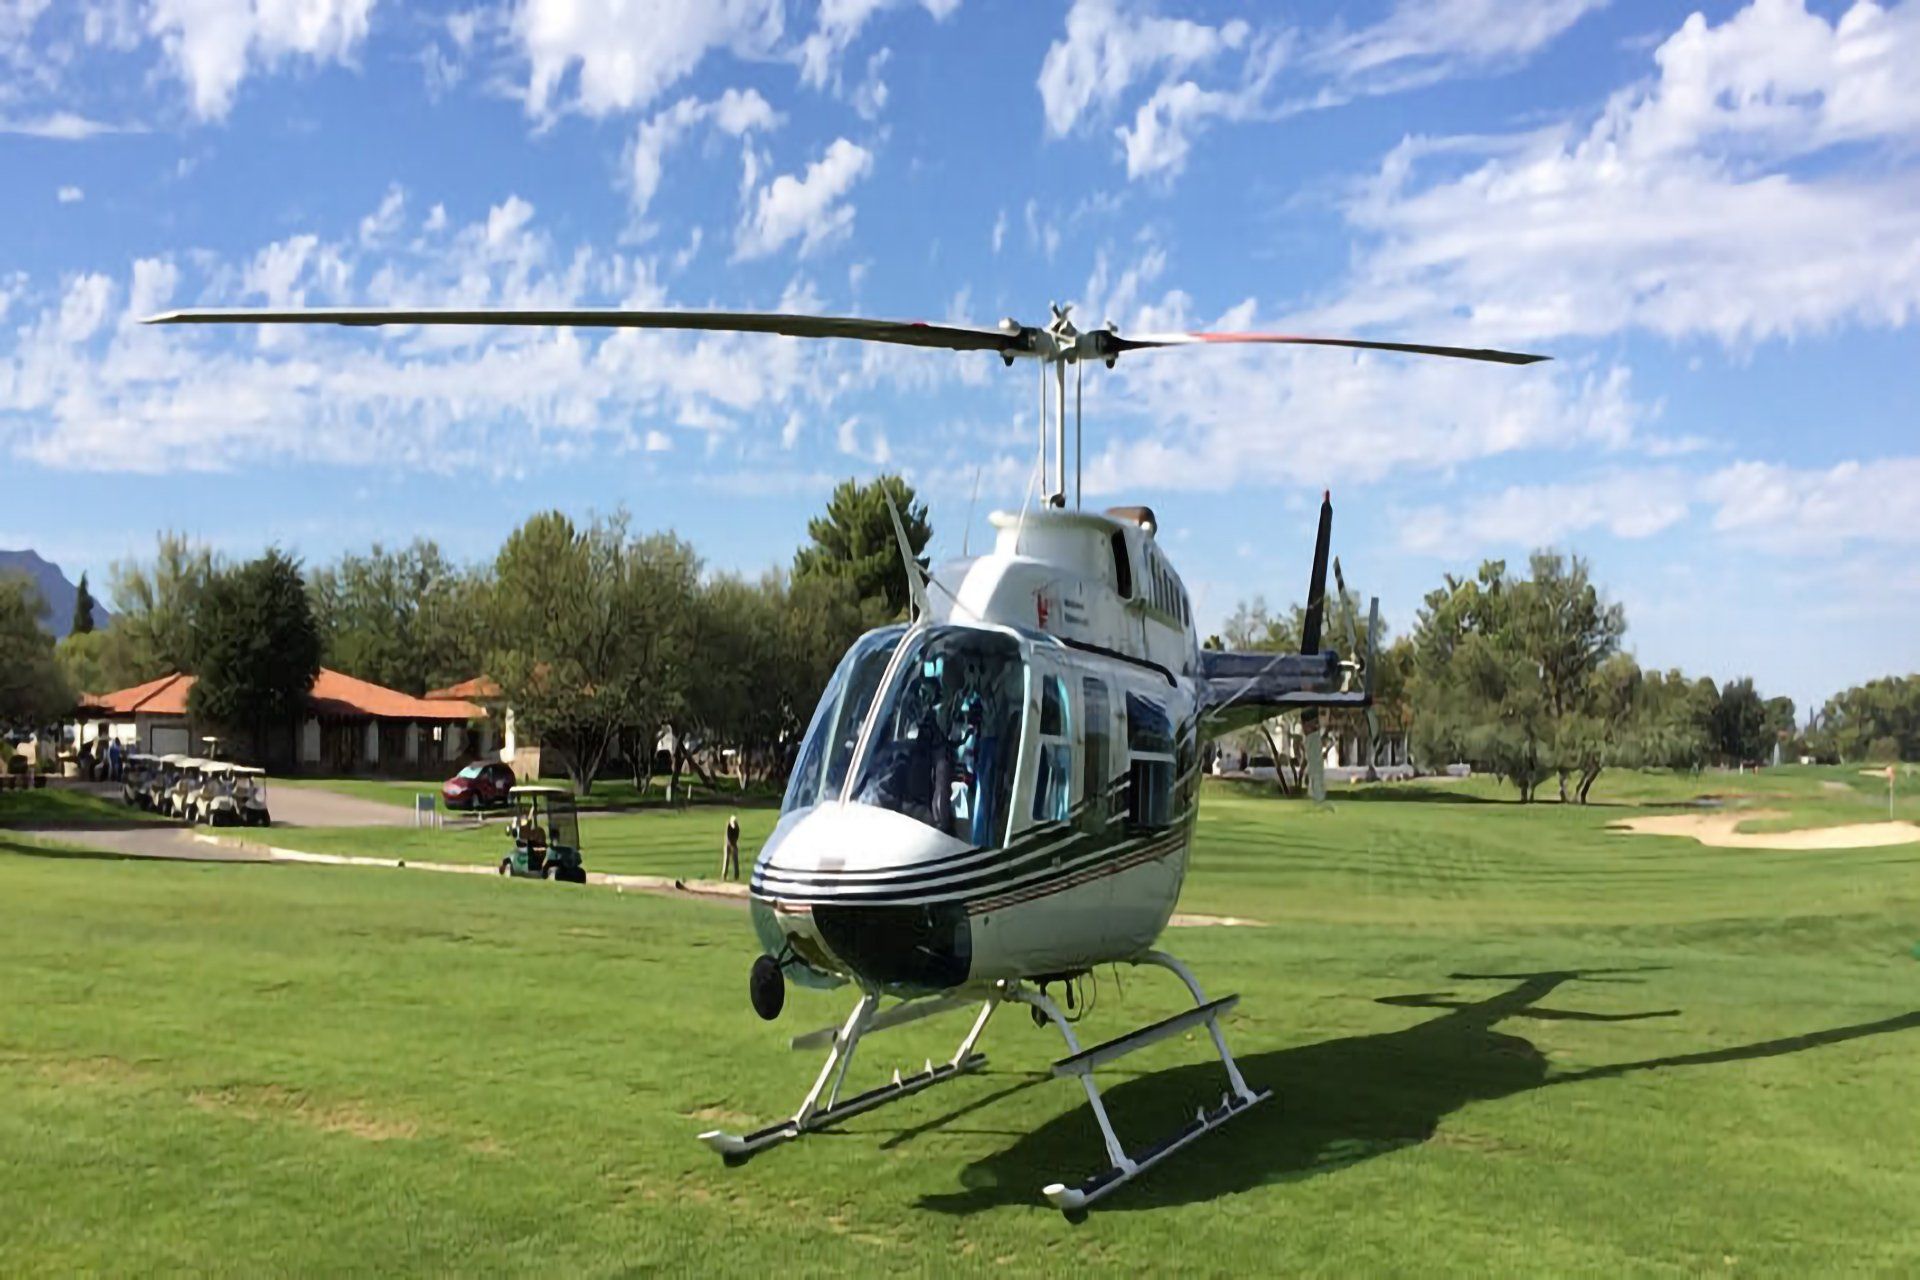 Helicopter On The Grass - Tucson, AZ - Southwest Heliservices, LLC